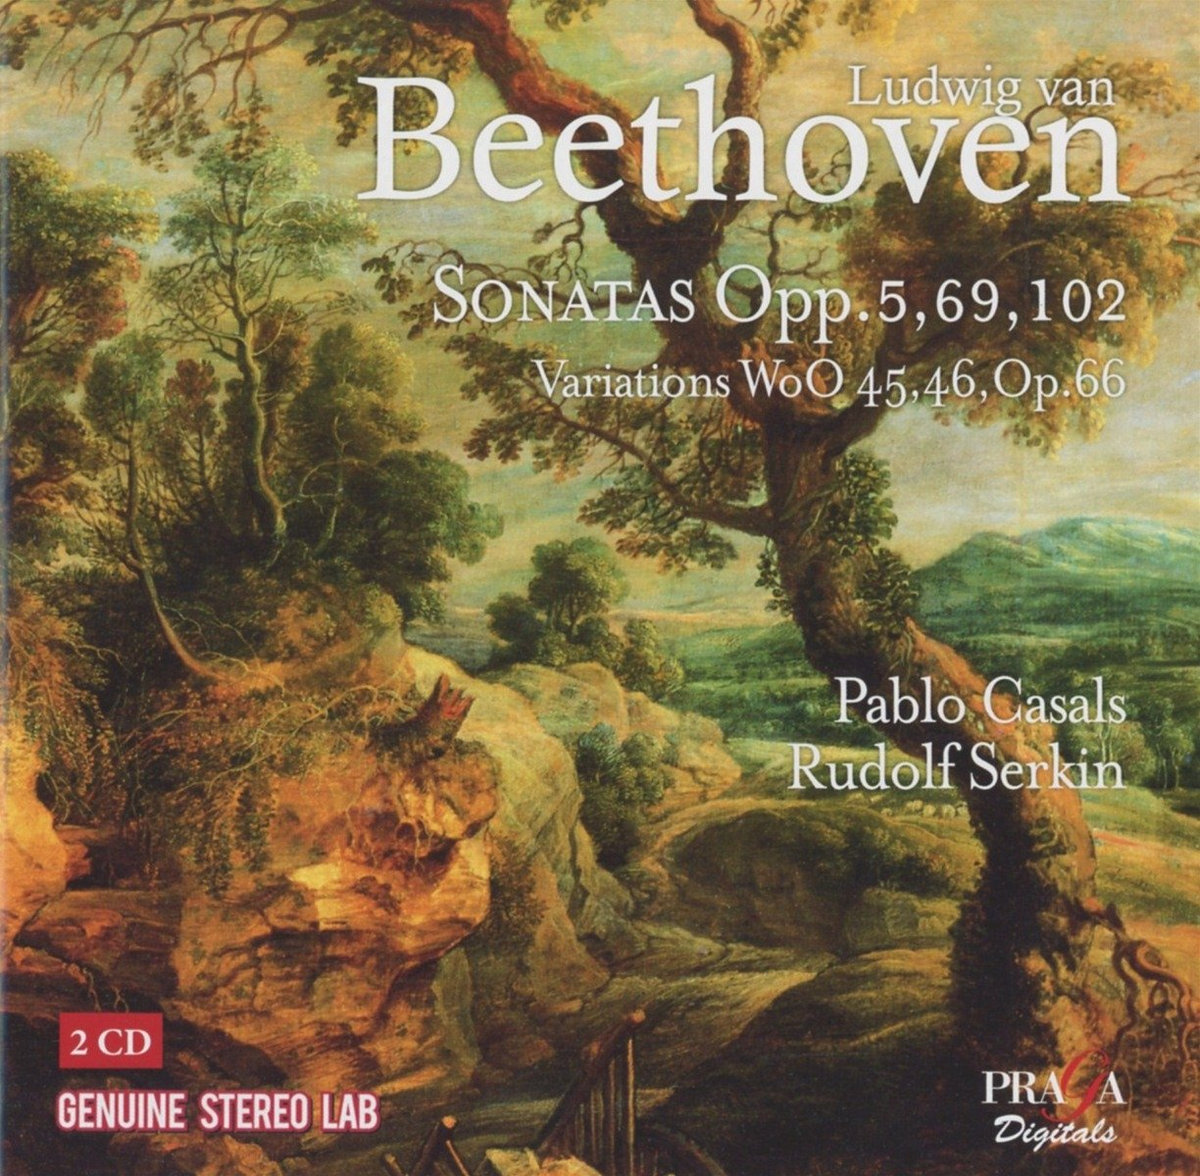 Ludwig van Beethoven: The Complete Works for Cello and Piano | Pablo  Casals, Rudolf Serkin | Praga Digitals